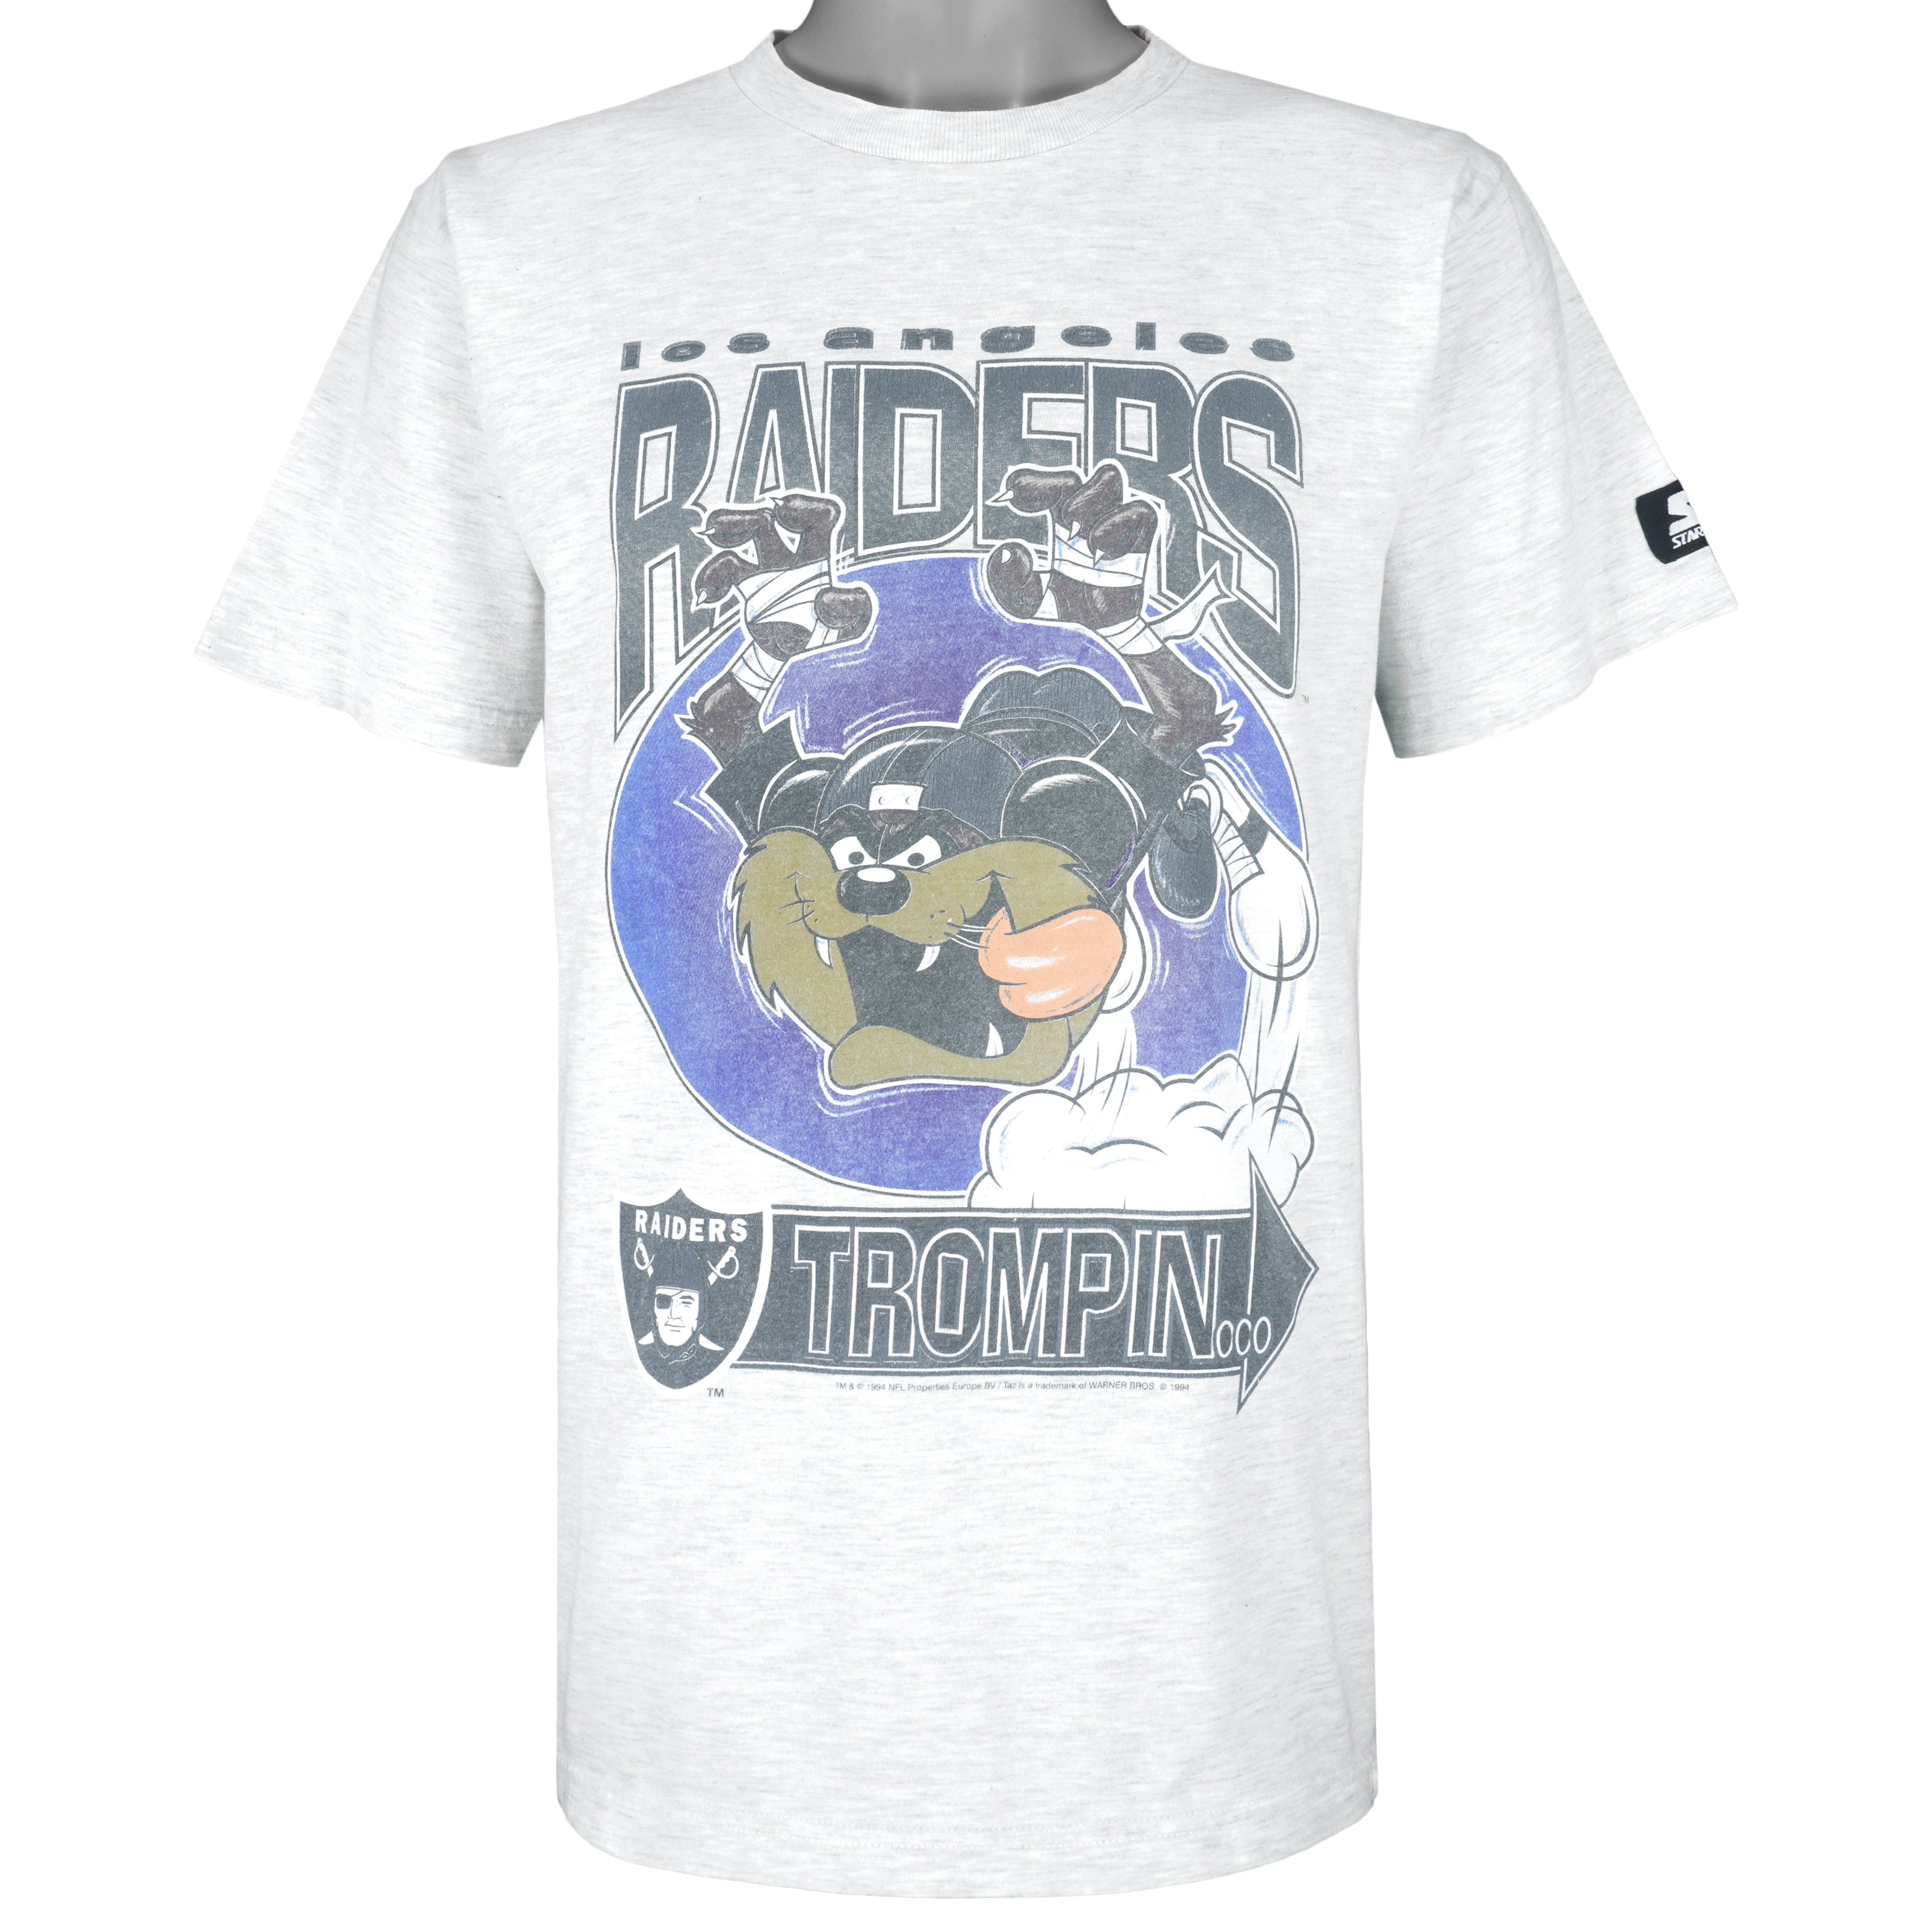 1994 Vintage Los Angeles Raiders T-Shirt